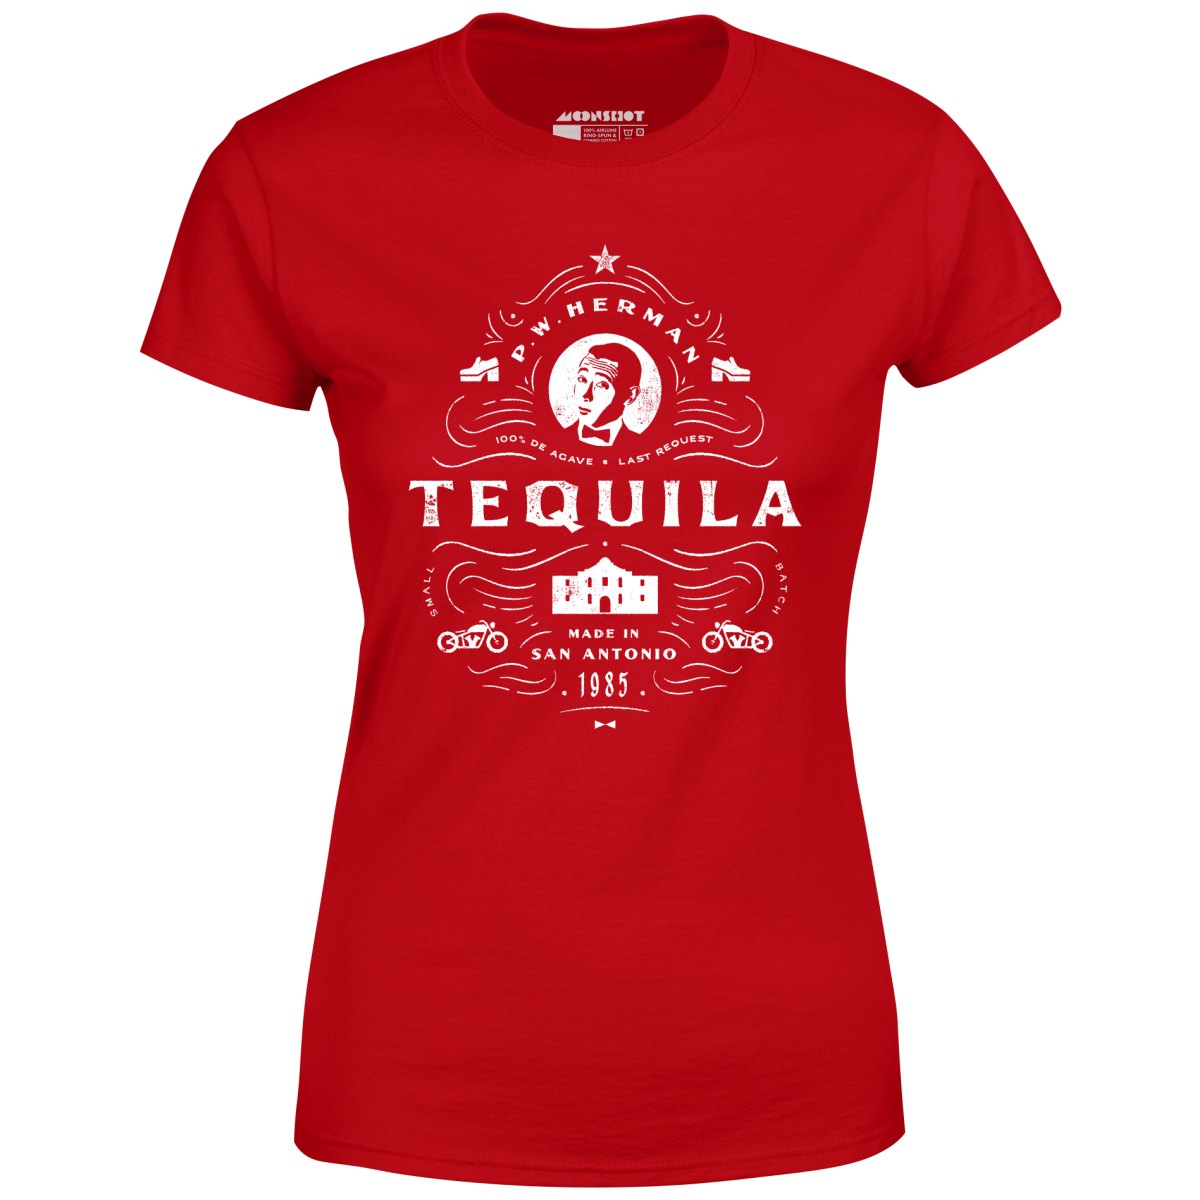 P.W. Herman Brand Tequila - Women's T-Shirt